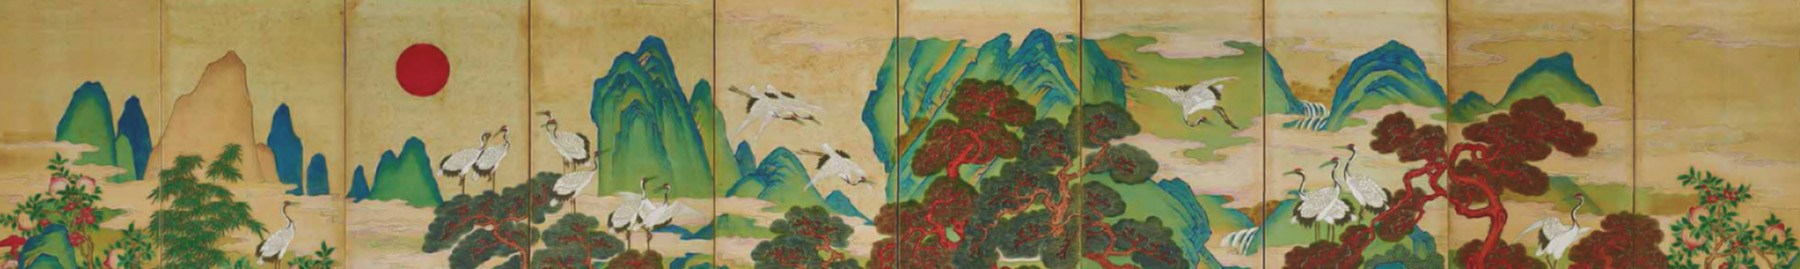 ancient korean painting of cranes